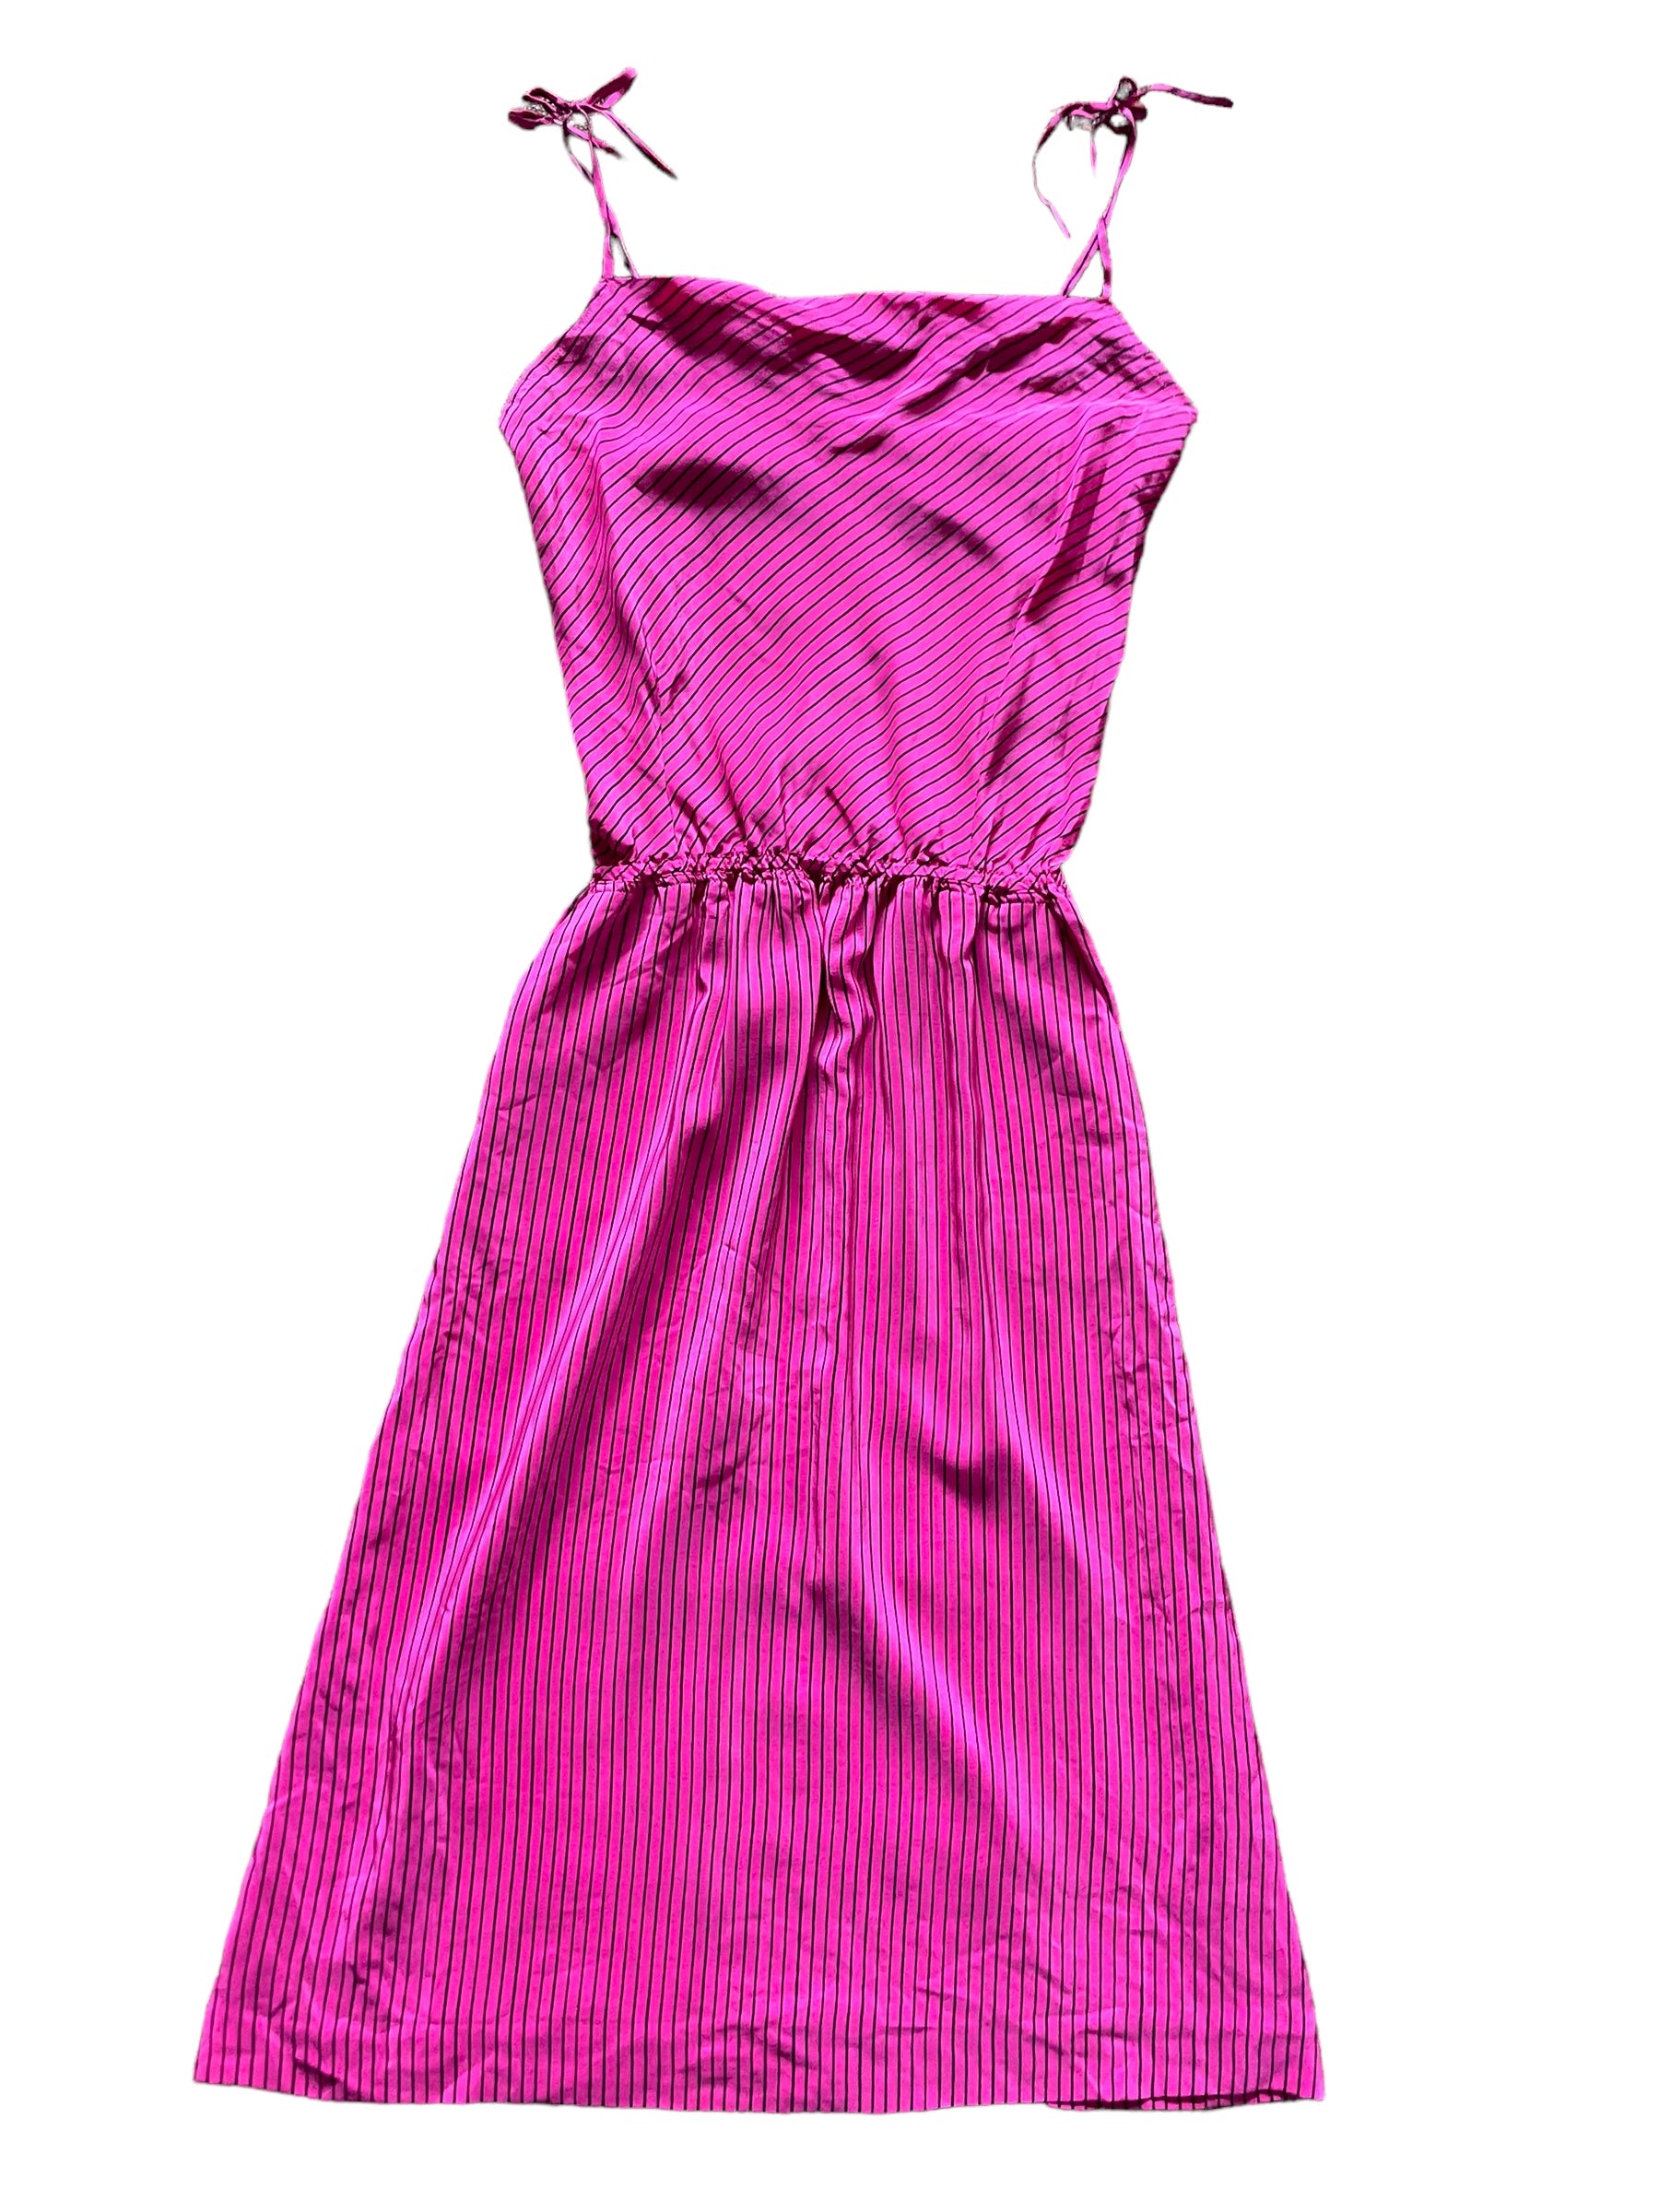 Full front view of Vintage 1980s Pink Dress w/ Black Stripes SZ XS  |  Barn Owl Vintage Dresses | Seattle Vintage Ladies Clothing